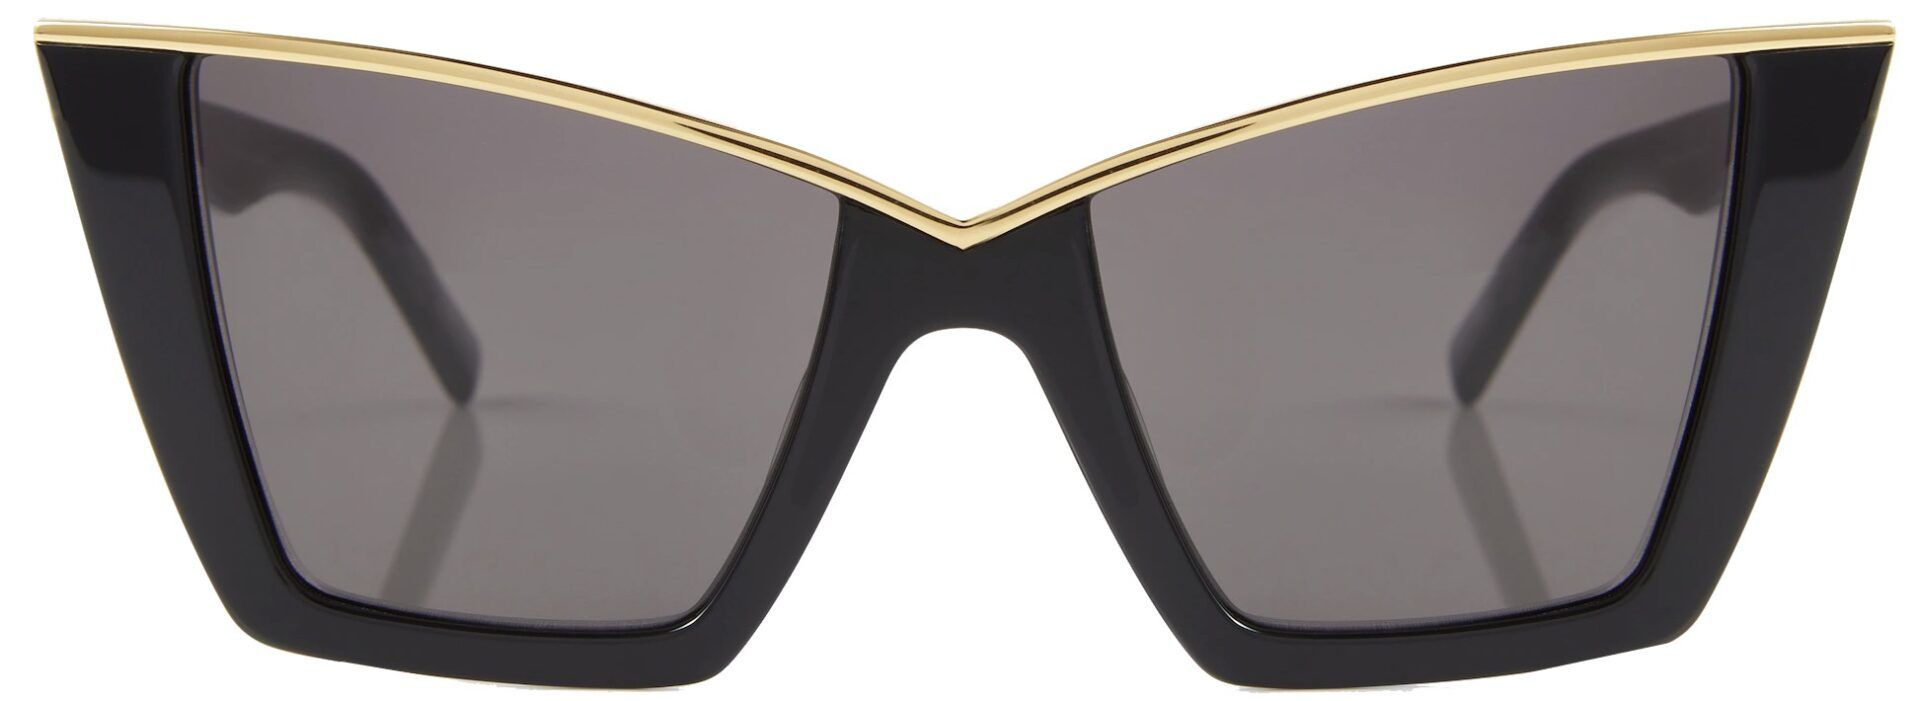 Sunglasses (SL570 Black Gold) | style